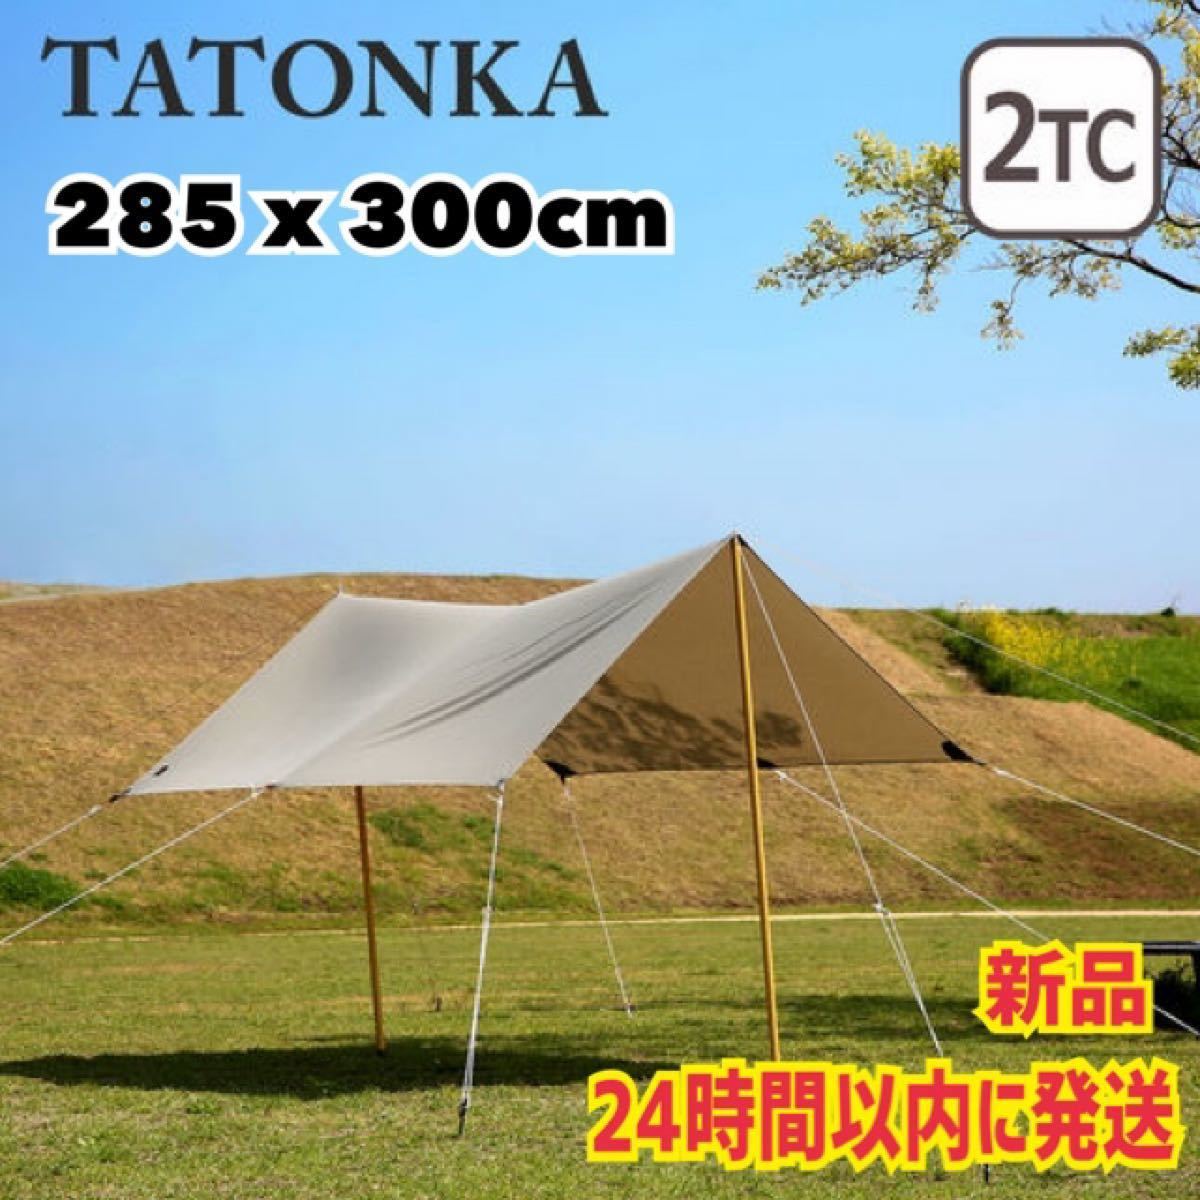 TATONKA タトンカ タープ 2 TC TARP ポリコットン 285 x 300cm サンド 